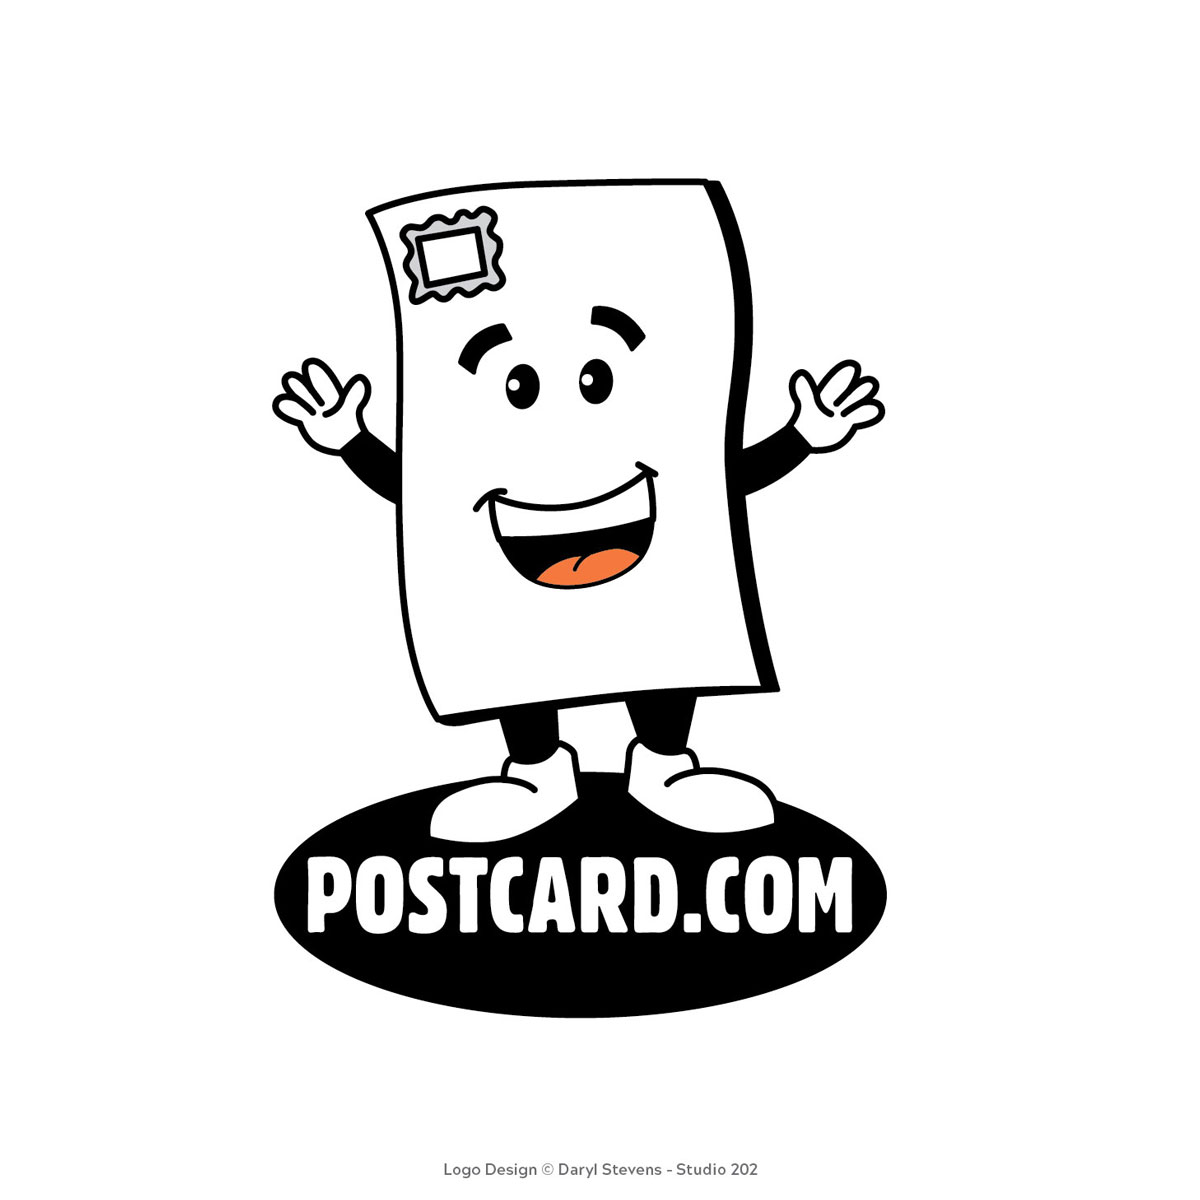 Postcard.com business branding by Daryl Stevens